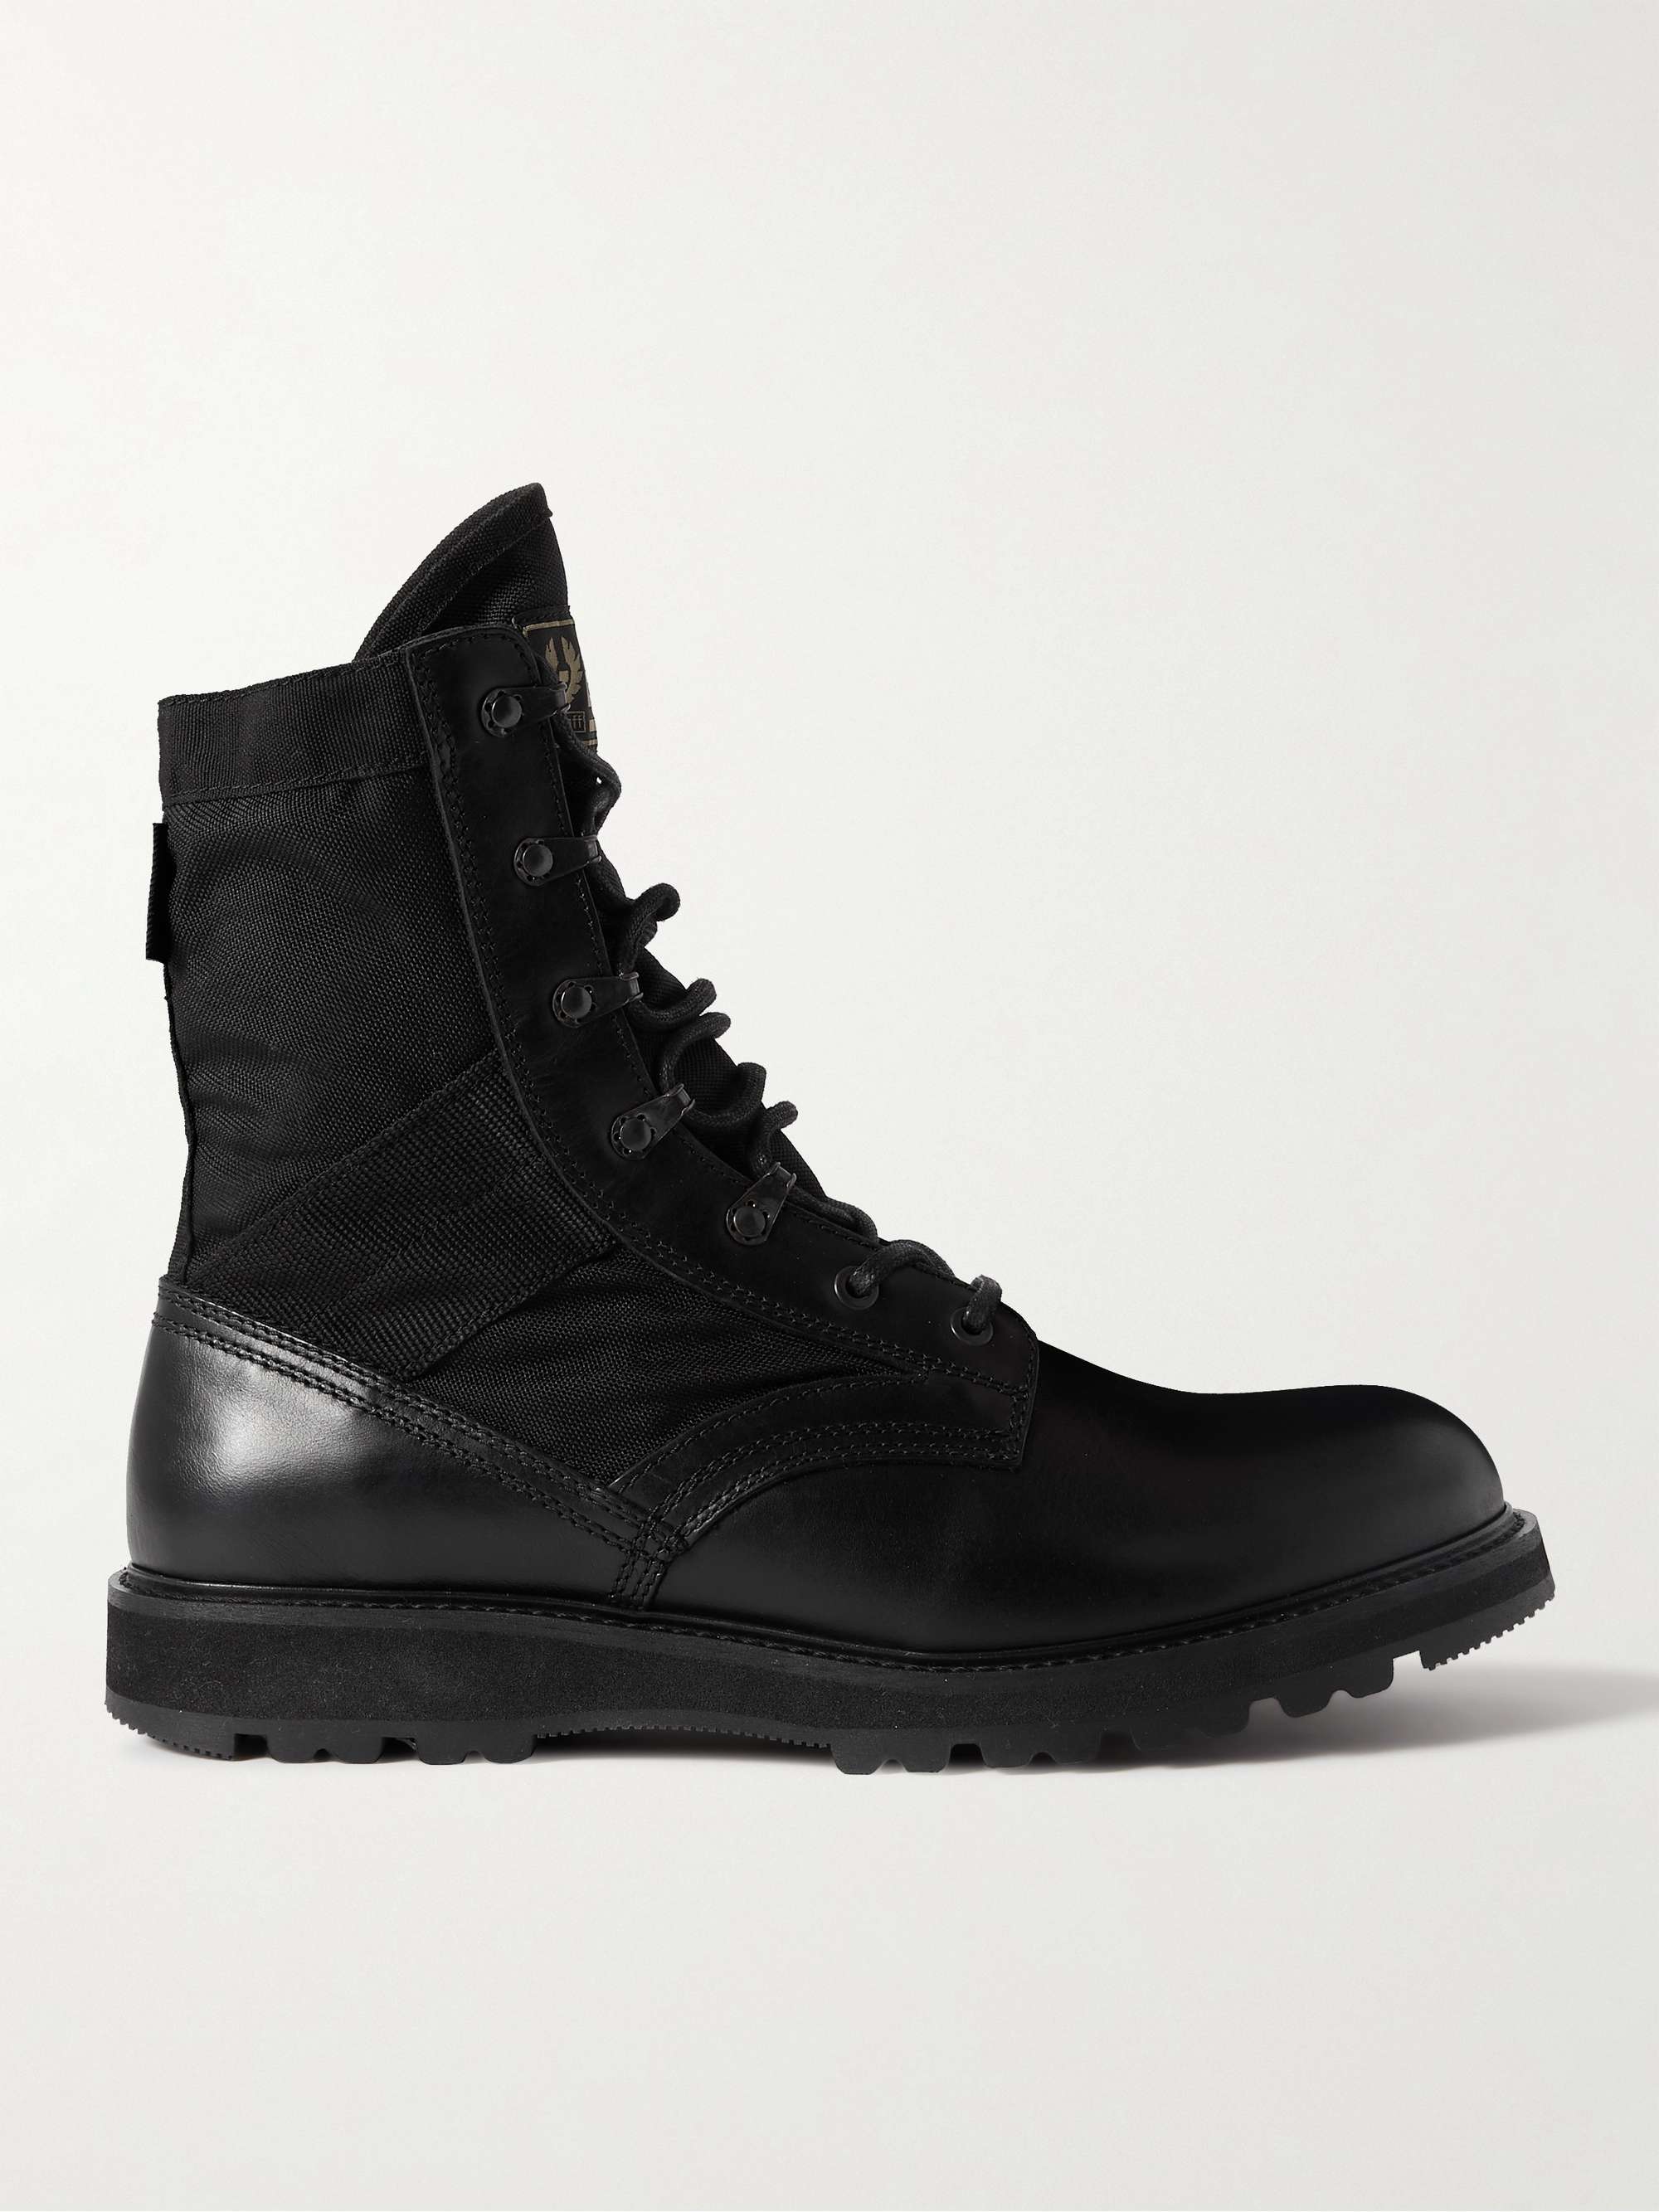 BELSTAFF Strorm Leather and Webbing-Trimmed CORDURA Boots | MR PORTER